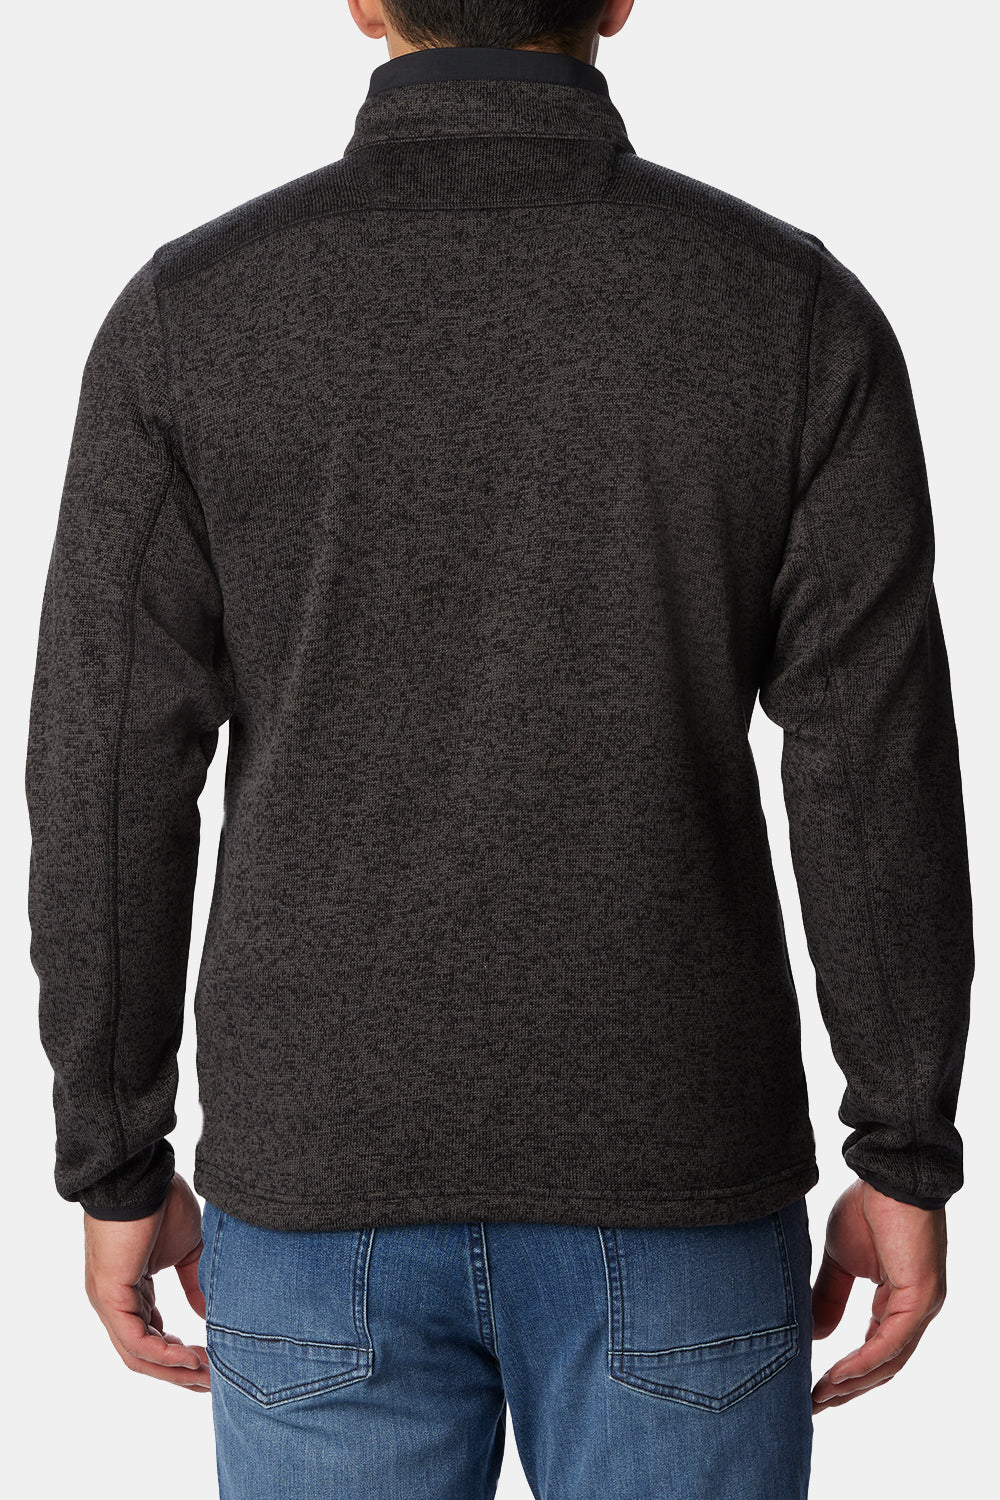 Columbia Sweater Weather Half Zip (Black Heather/Black)